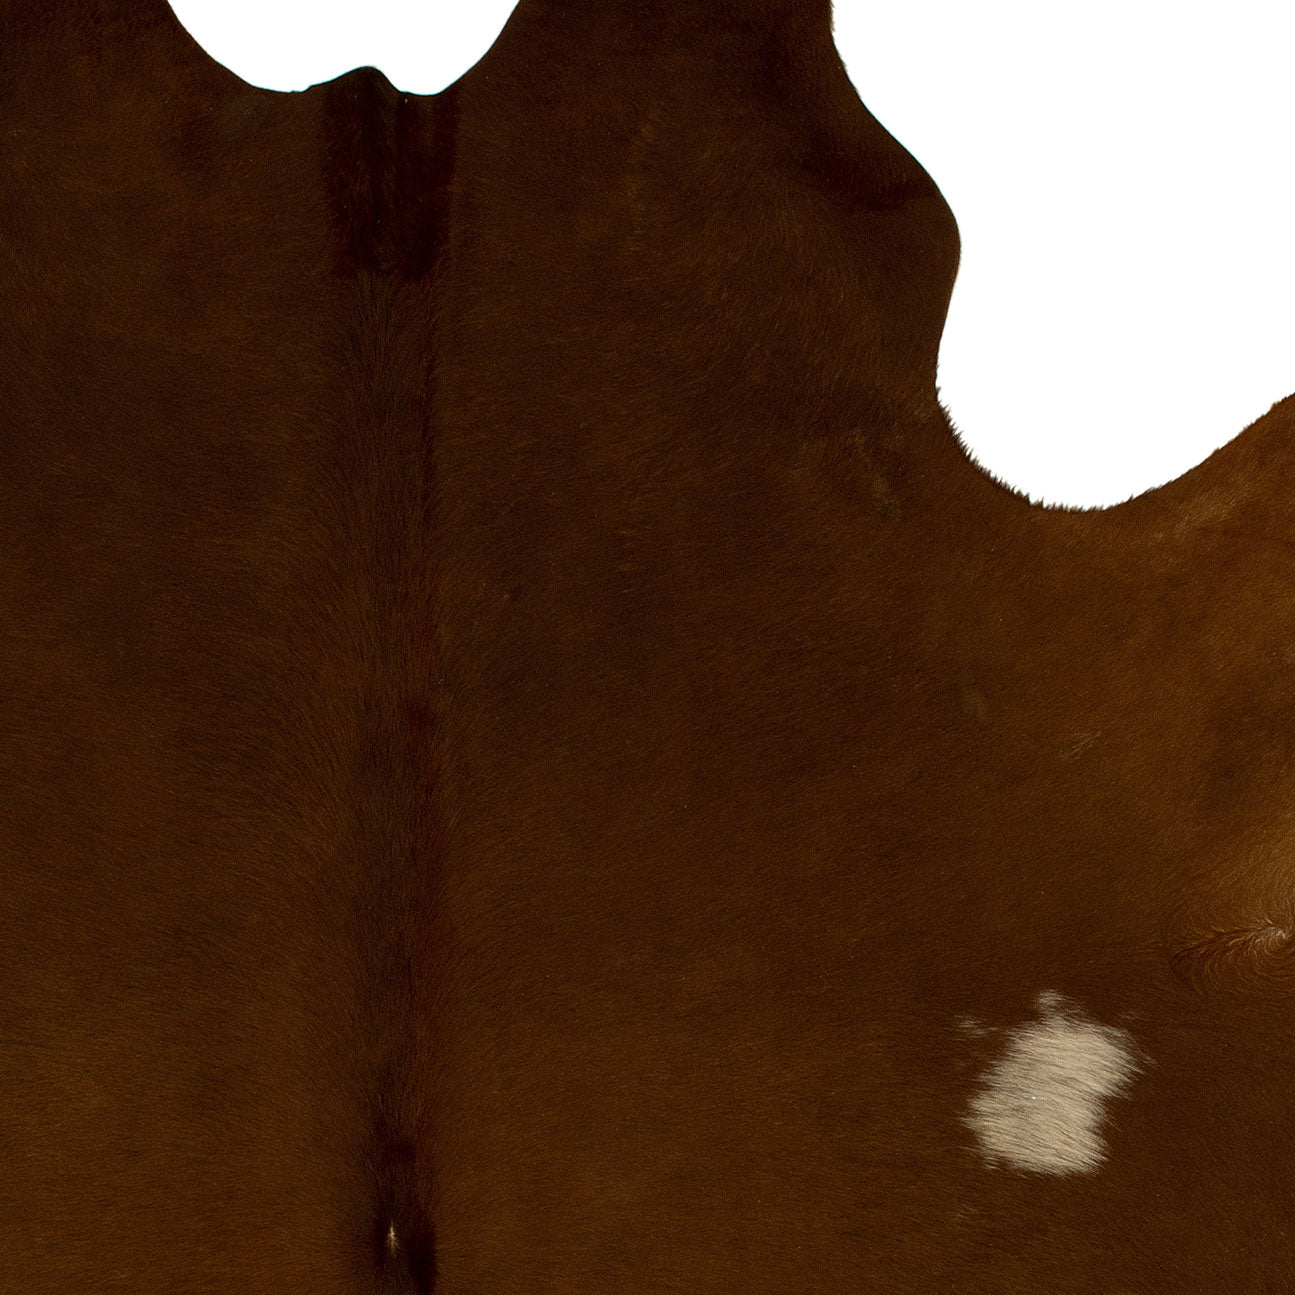 K166 | Unieke Koeienhuid | bruin, donkerbruin & beige  | ca. 180 x 160cm